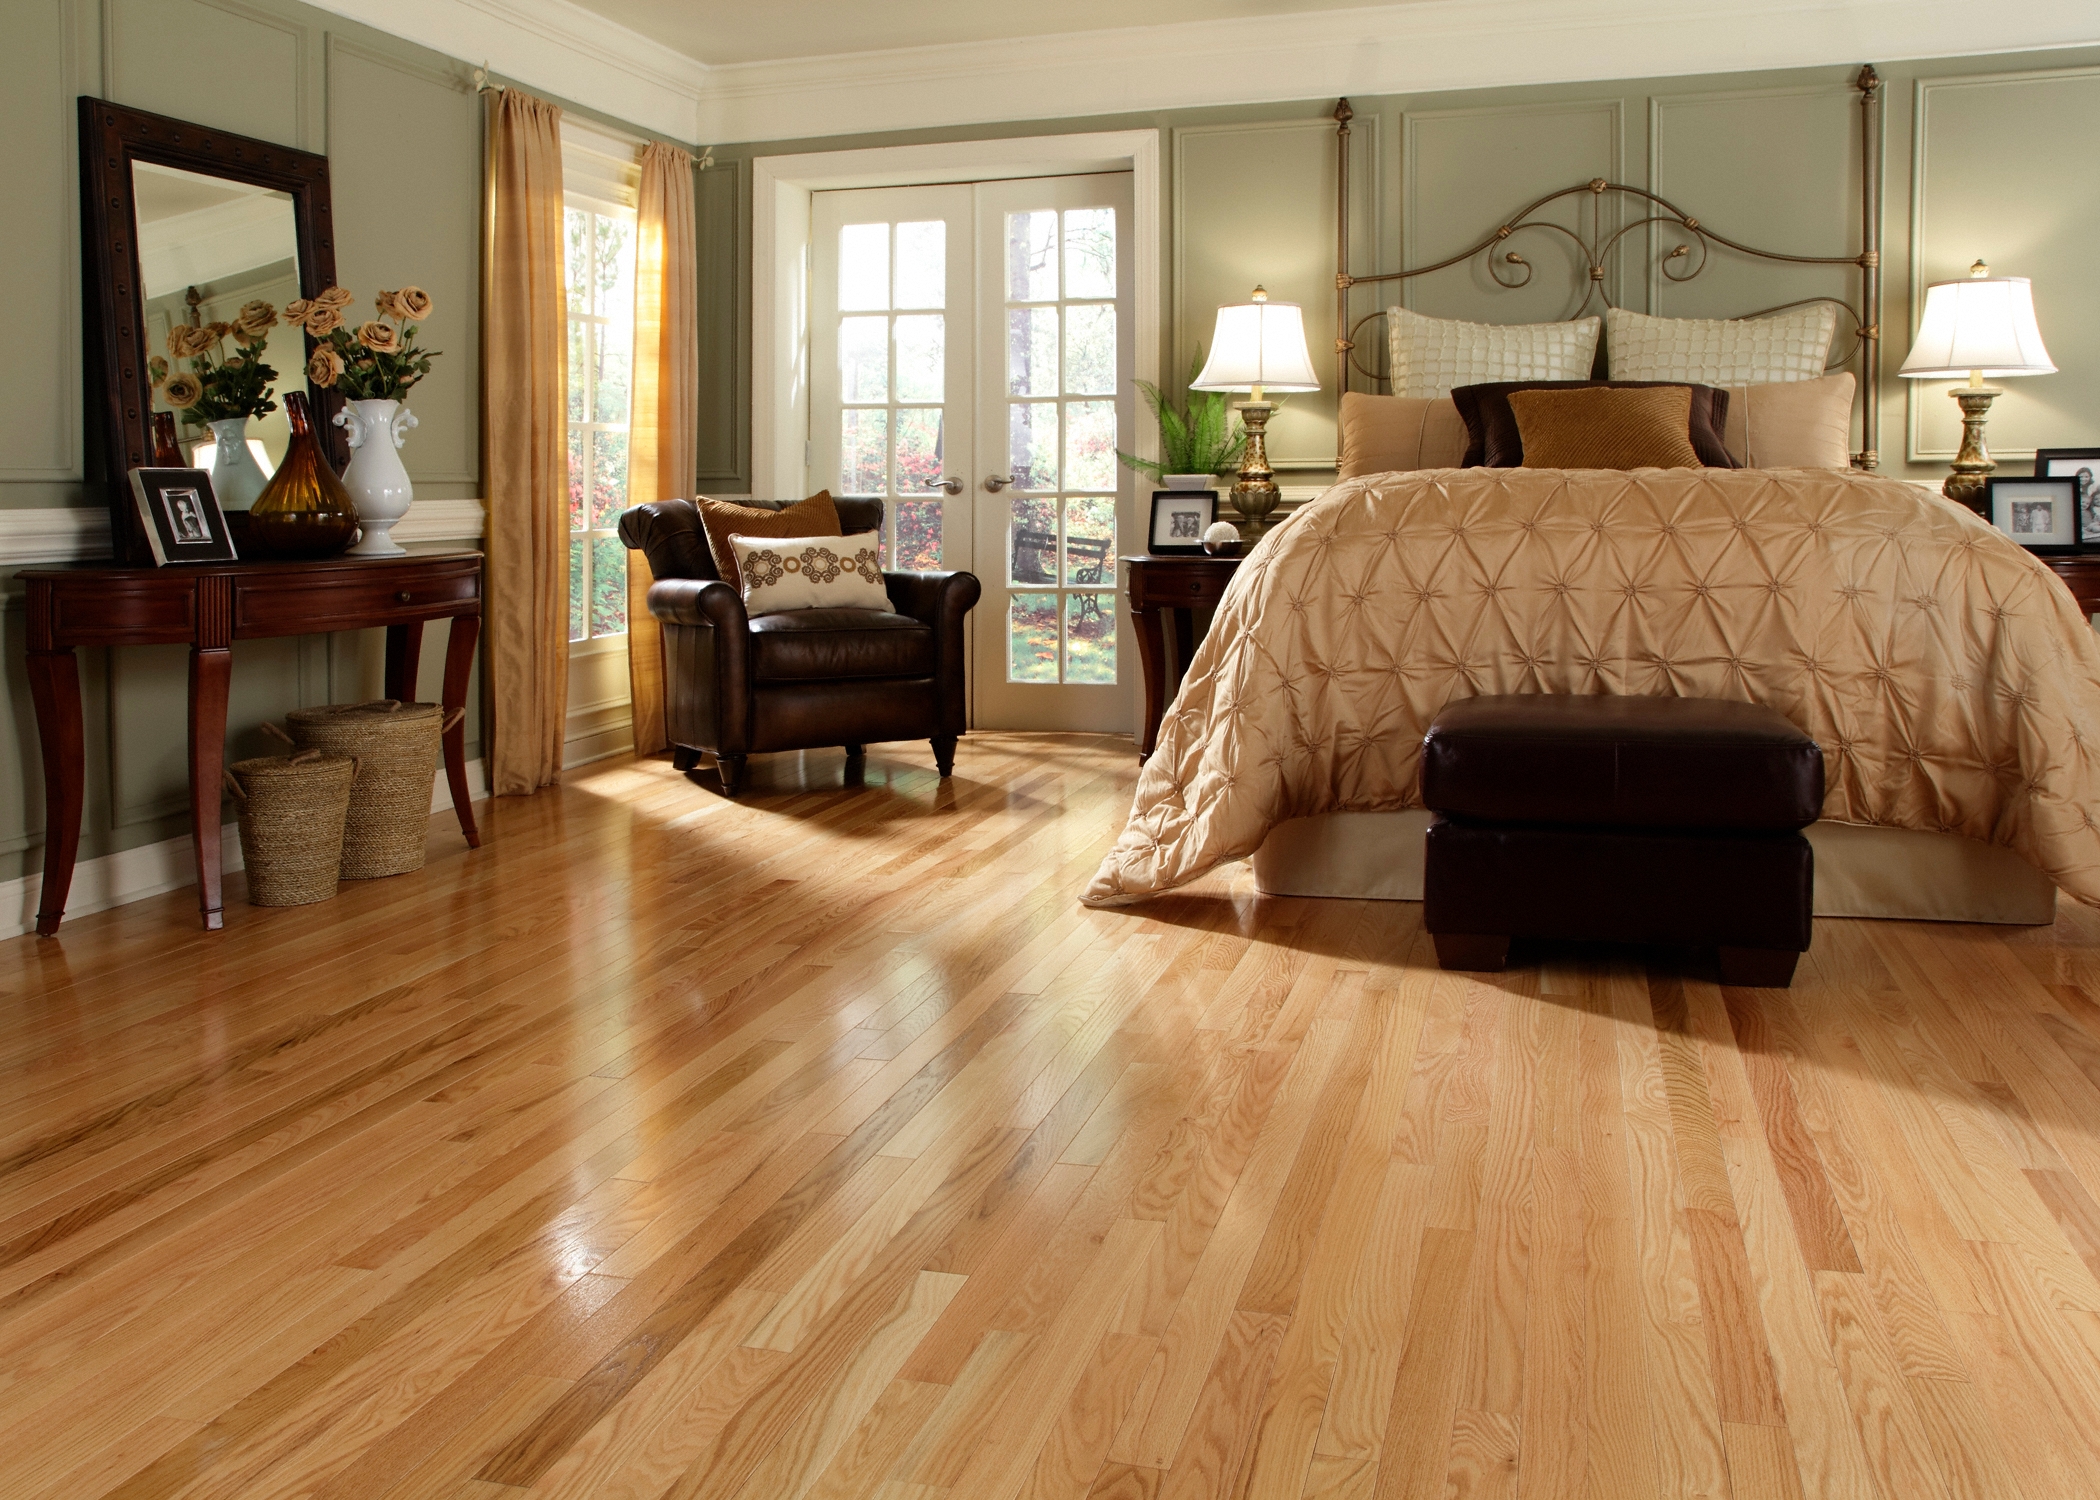 Red Oak Solid Hardwood Flooring 2 25, Red Oak Natural Finish Hardwood Flooring